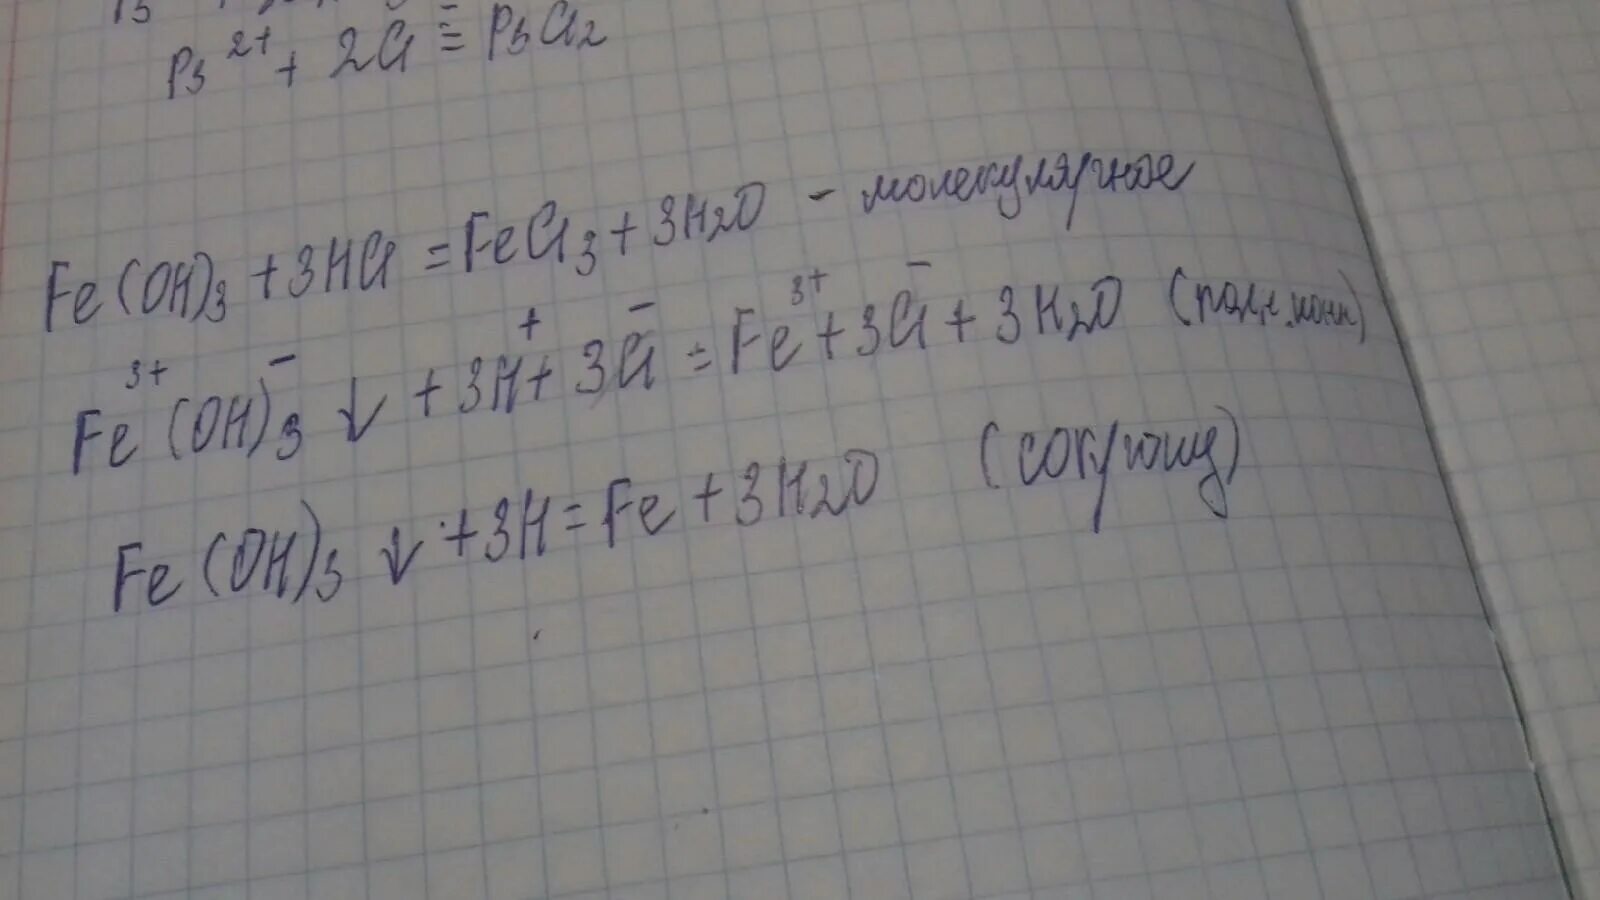 Fe oh 3 hcl fecl3. Fe Oh 3+3hcl ионное. Fe(Oh)3 + 3 HCL → 3 h2o + fecl3. Fe Oh 3 HCL ионное уравнение. HCL + Fe(Oh)3 → fecl3 + 3 h2o.